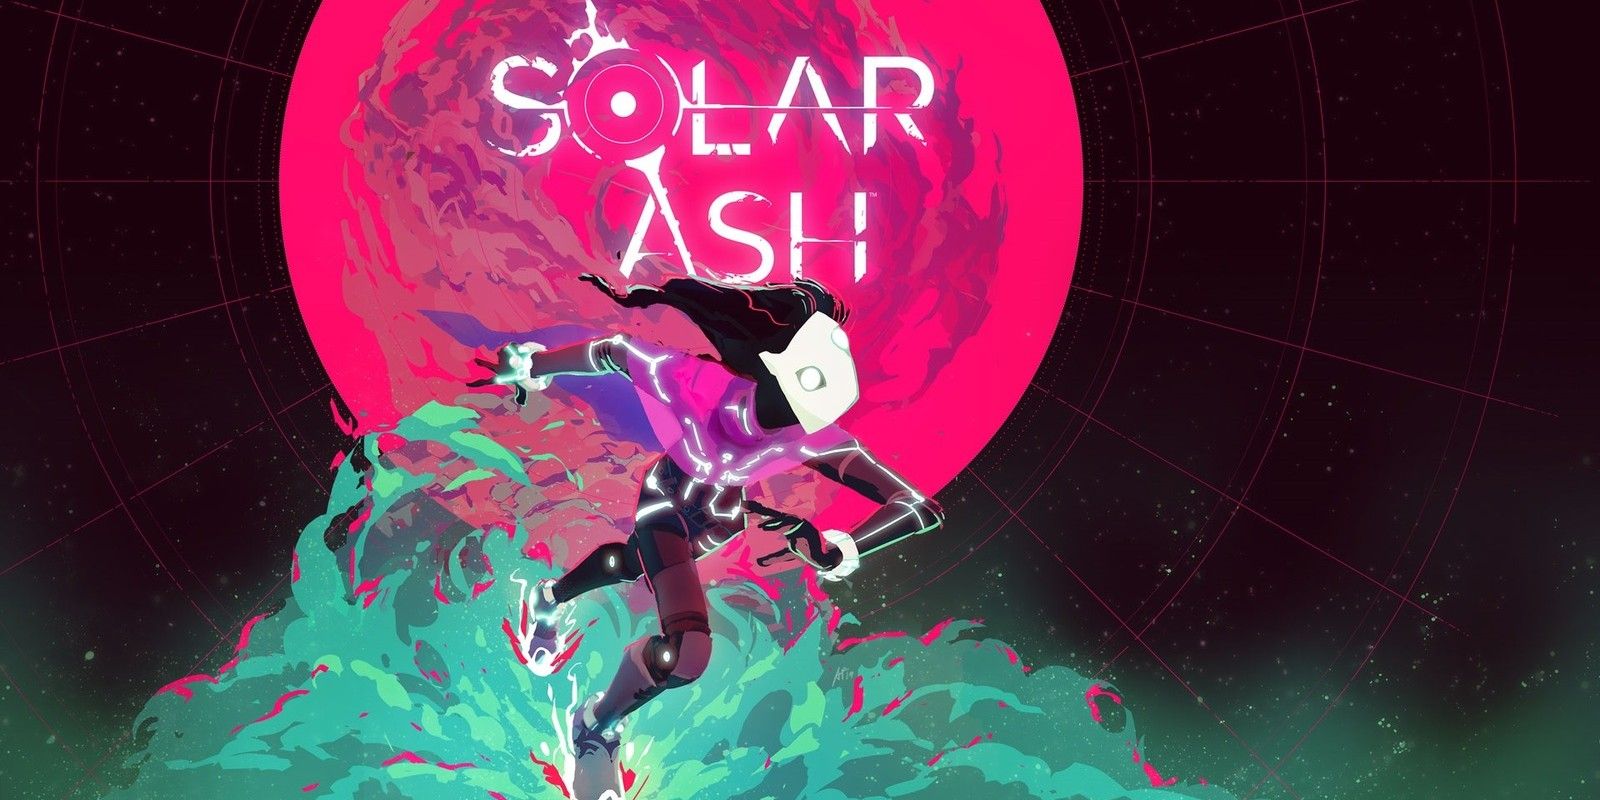 download solar ash xbox one